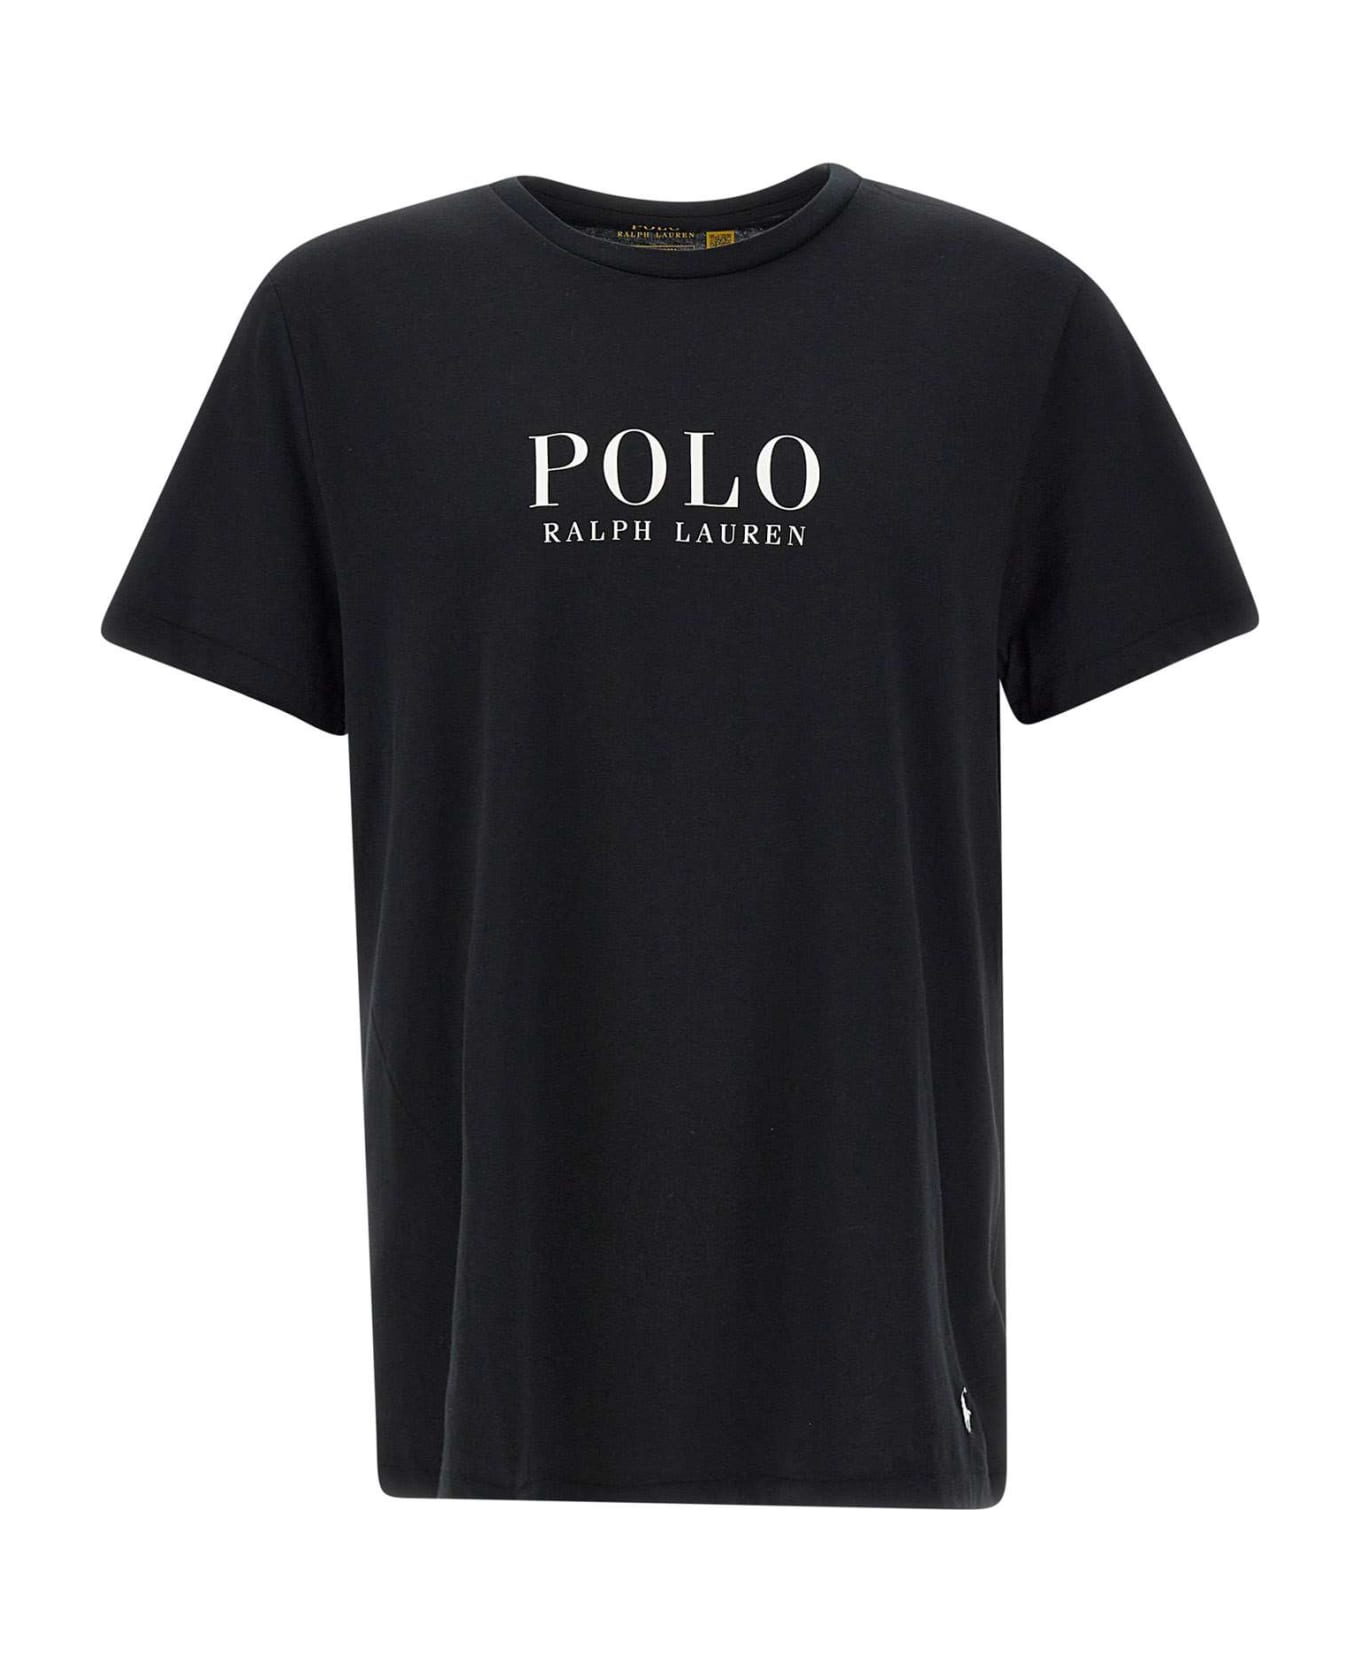 Polo Ralph Lauren 'msw' Cotton T-shirt - Polo black